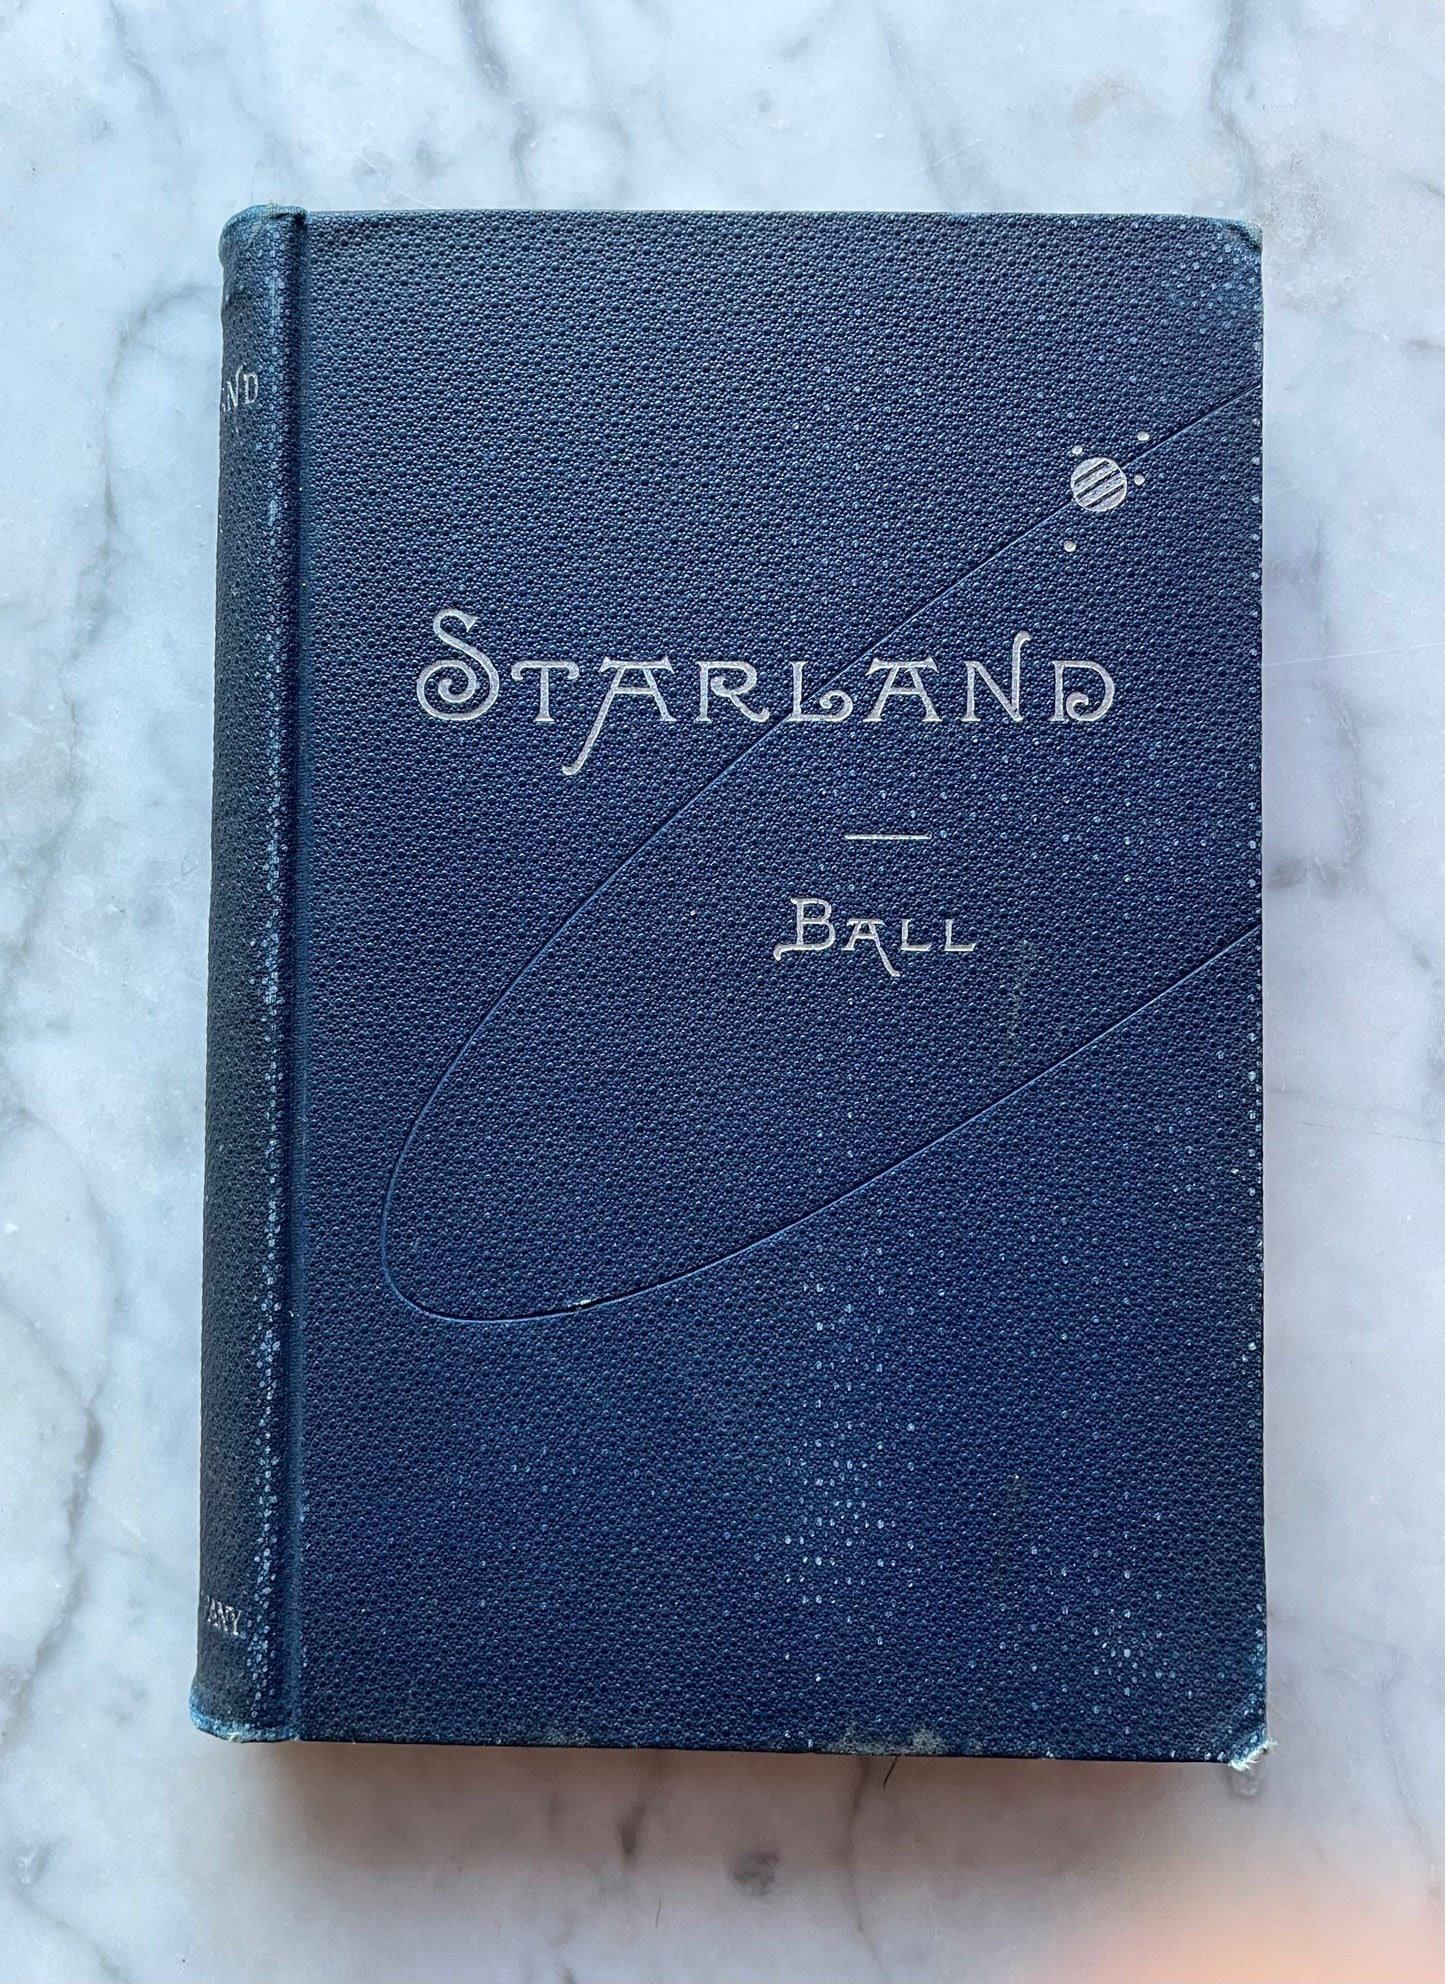 Starland by Robert Stawell Ball